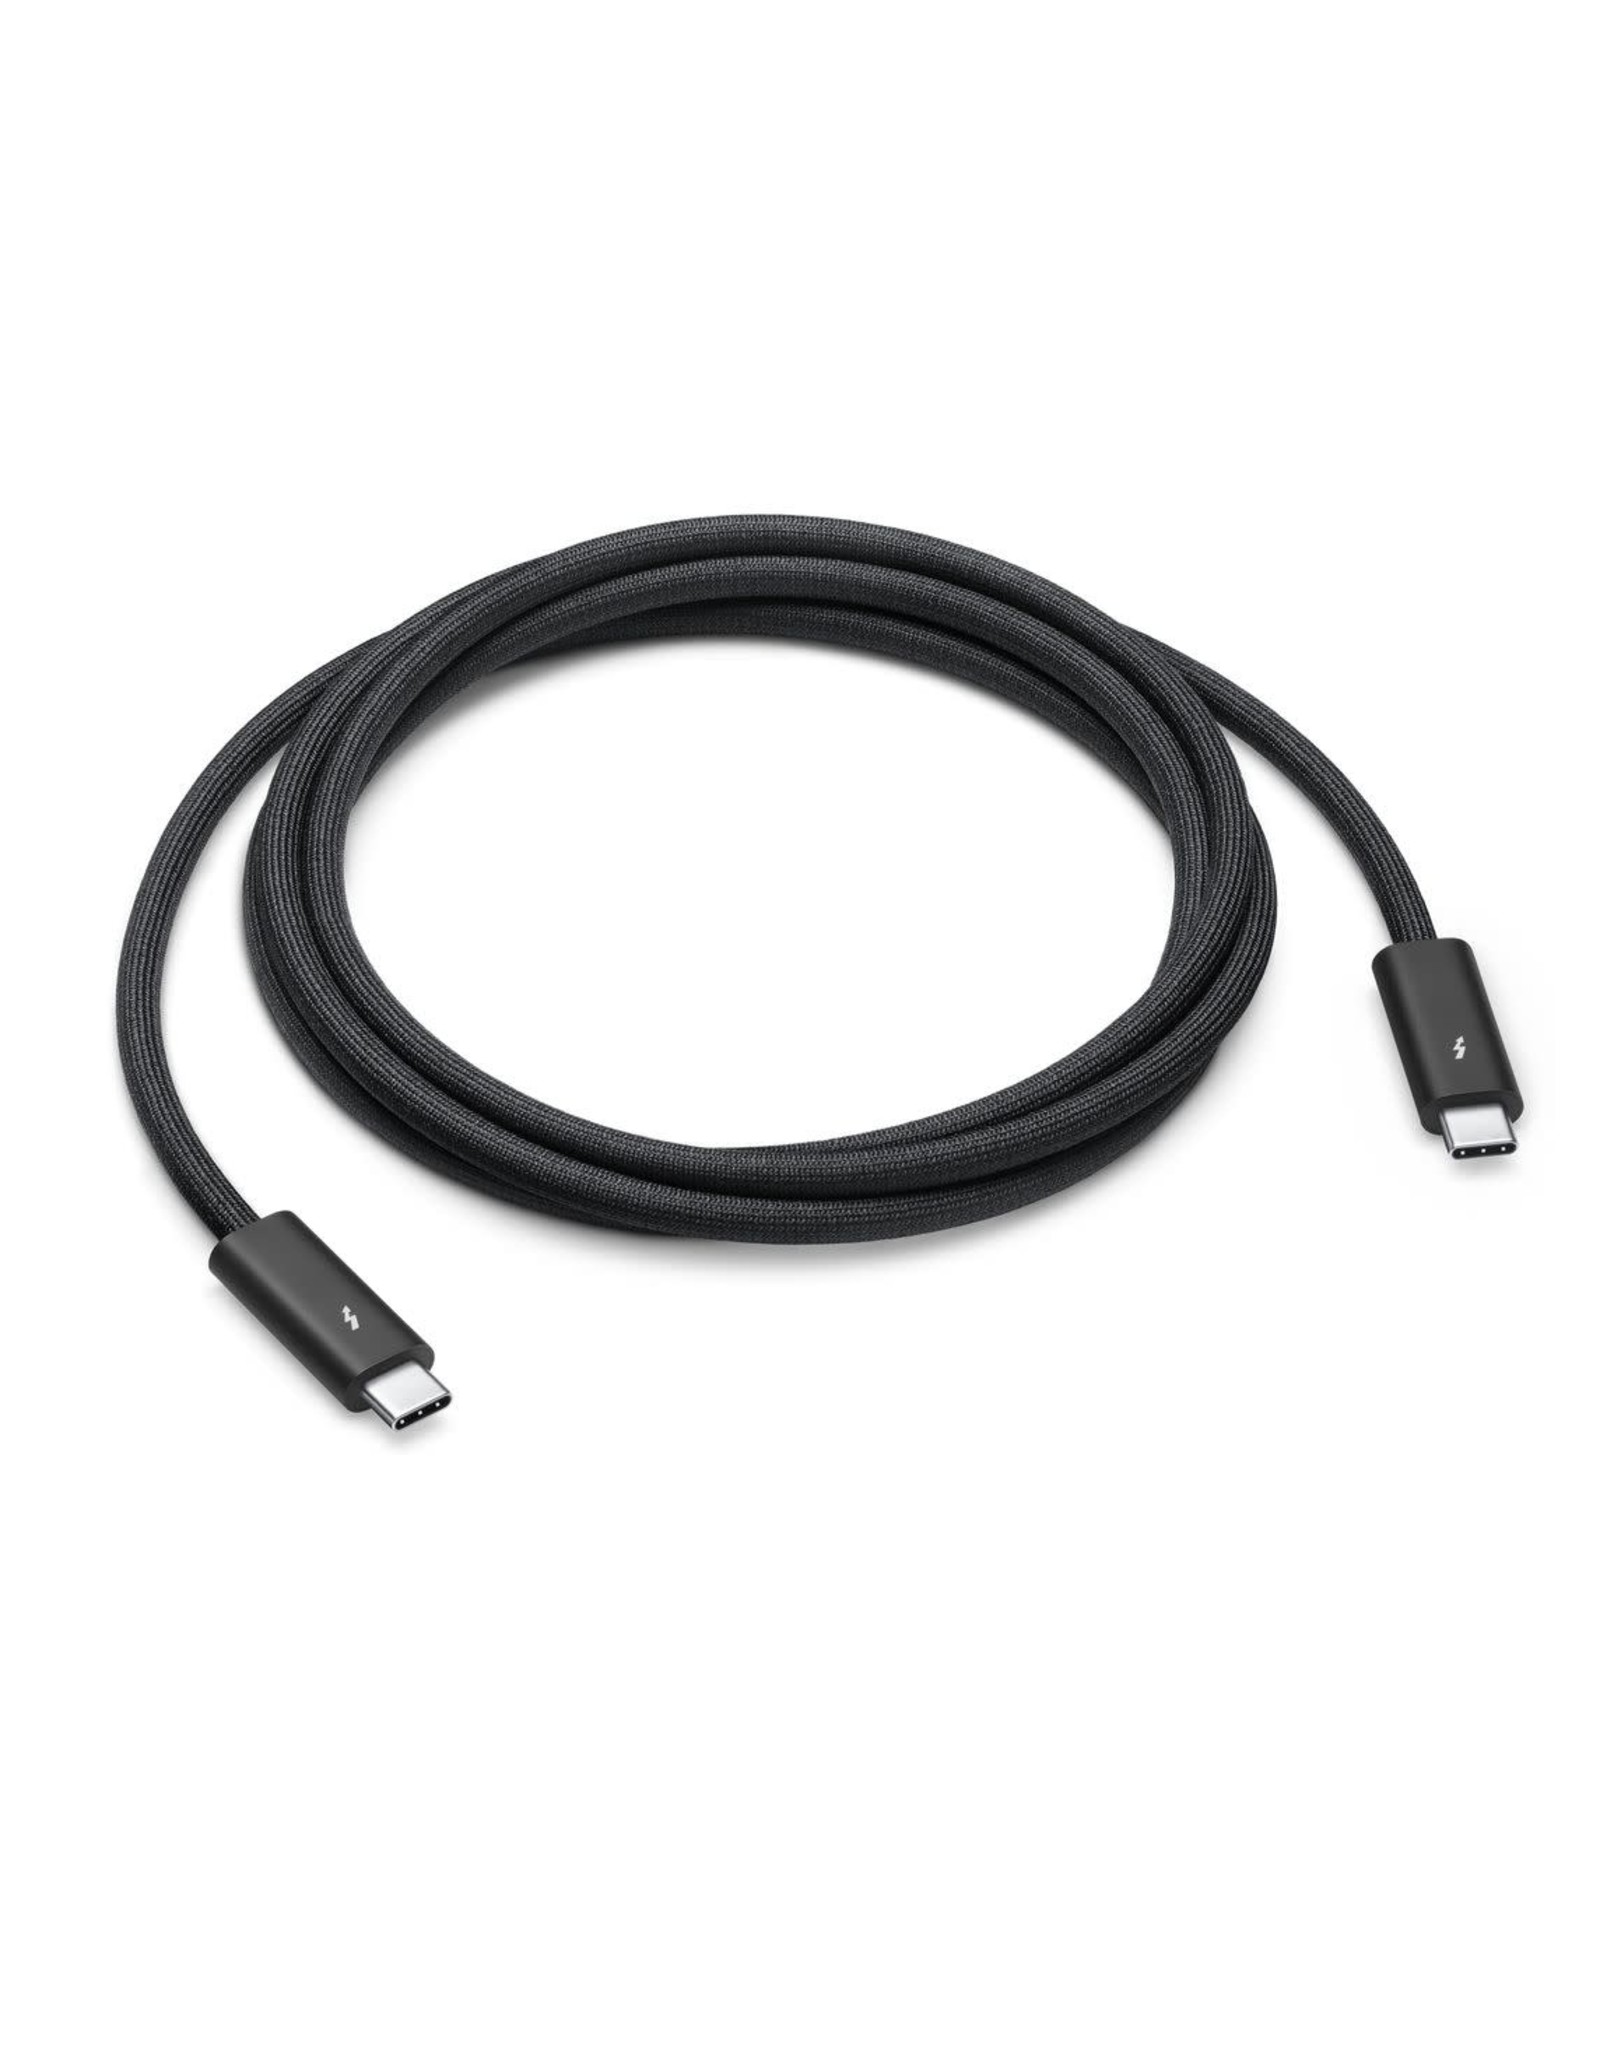 Apple Apple Thunderbolt 4 Pro Cable - 1.8m